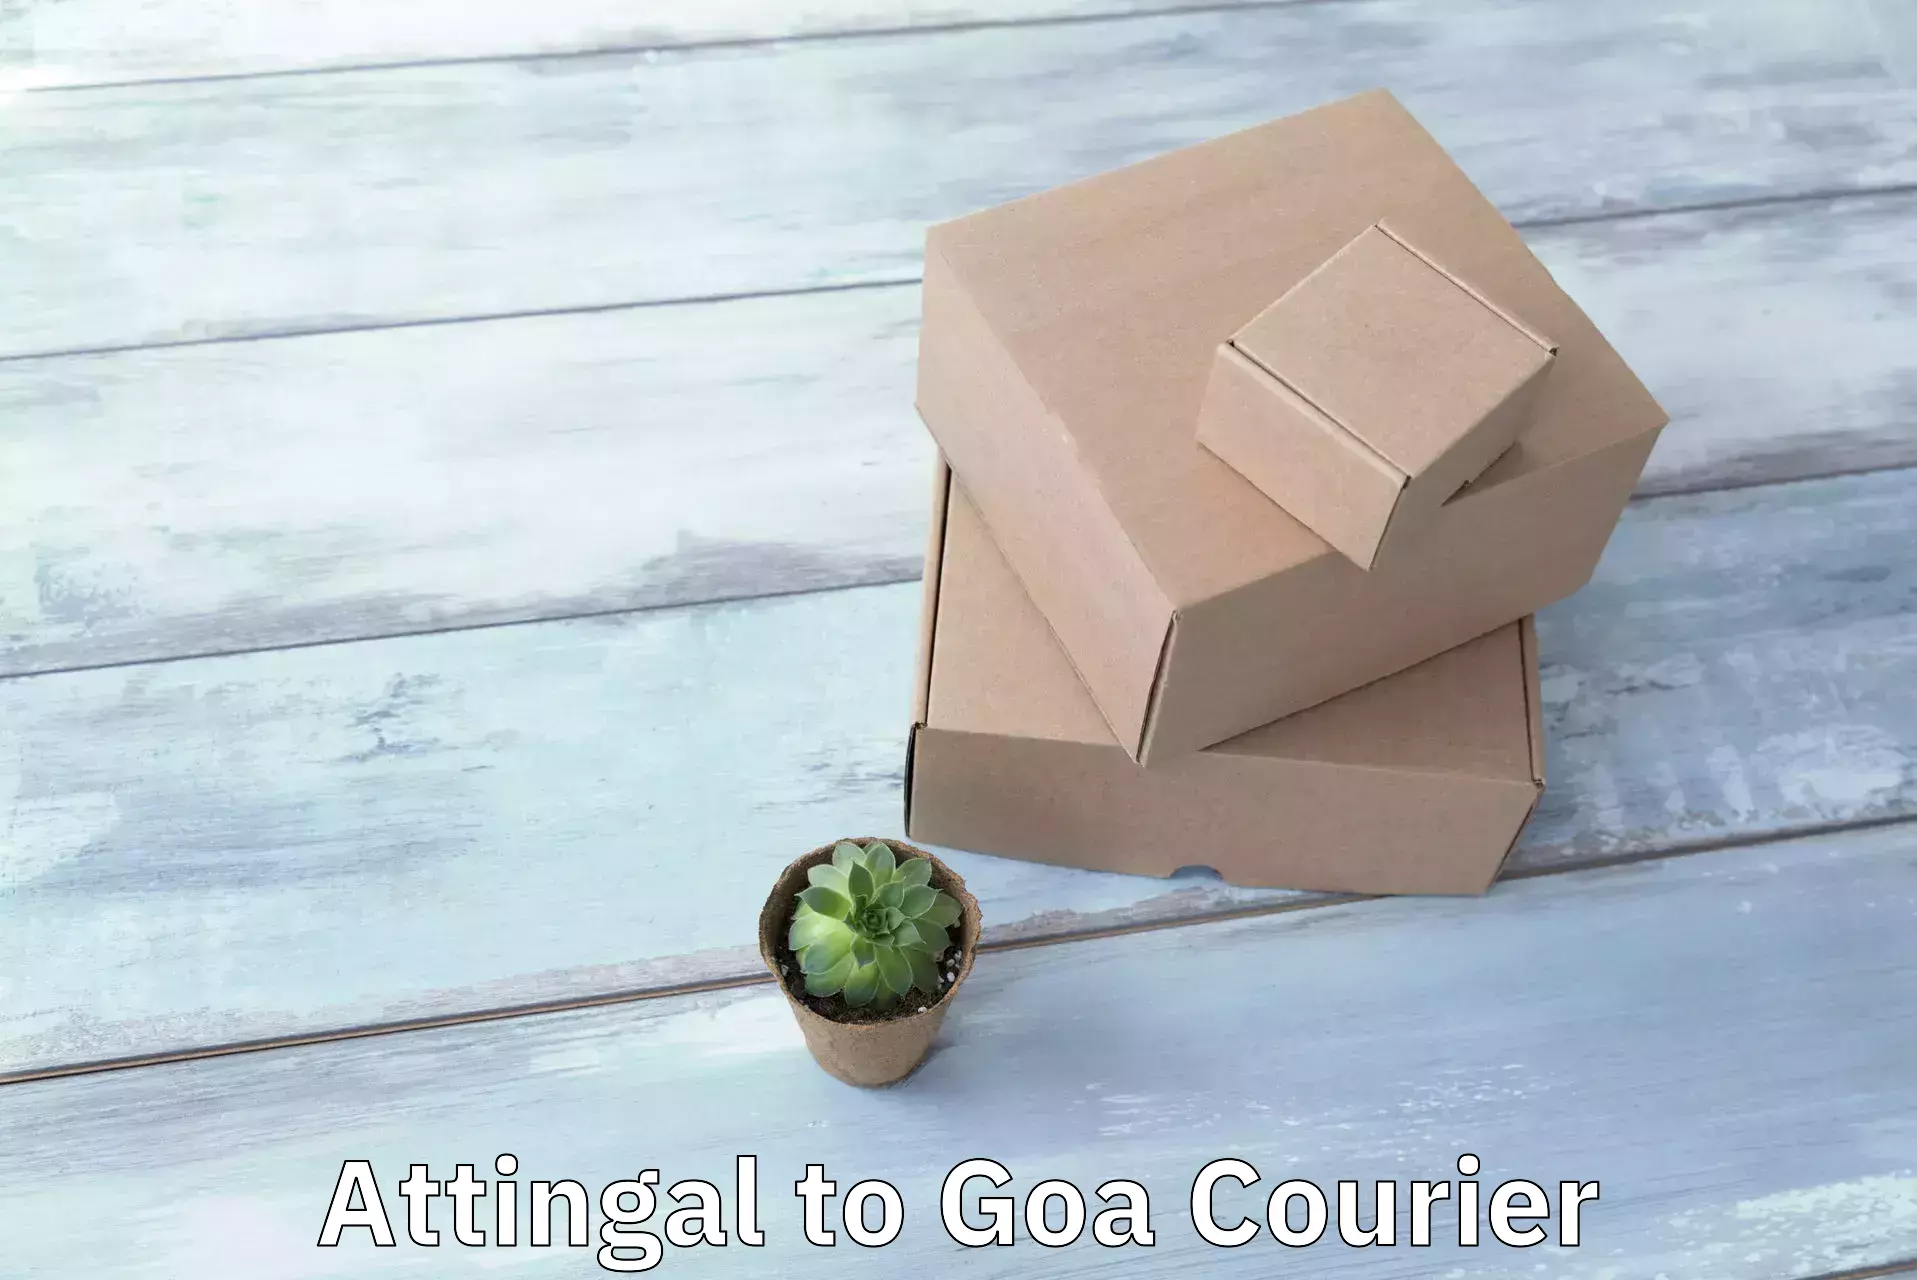 Business shipping needs Attingal to Goa